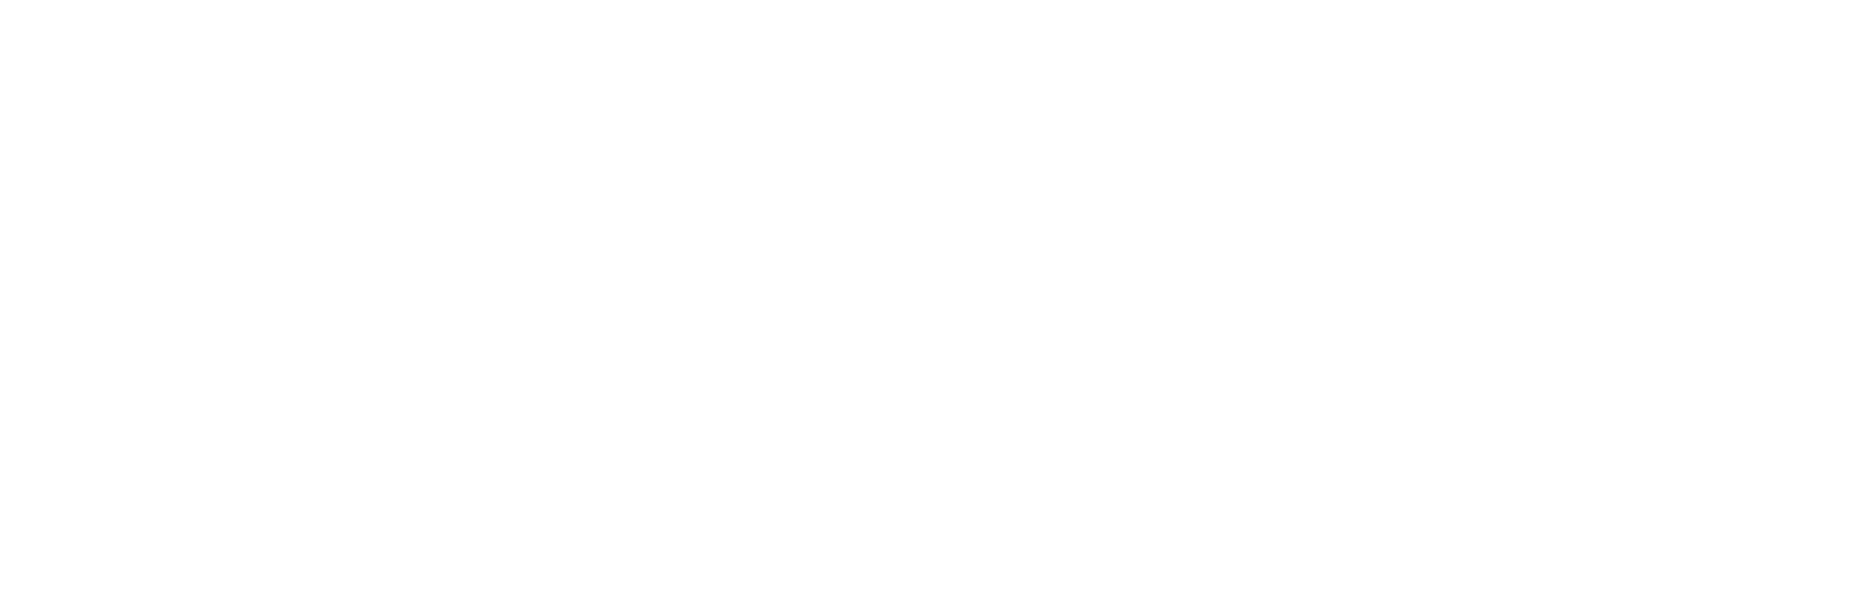 Ciclovia Reventino-Savuto